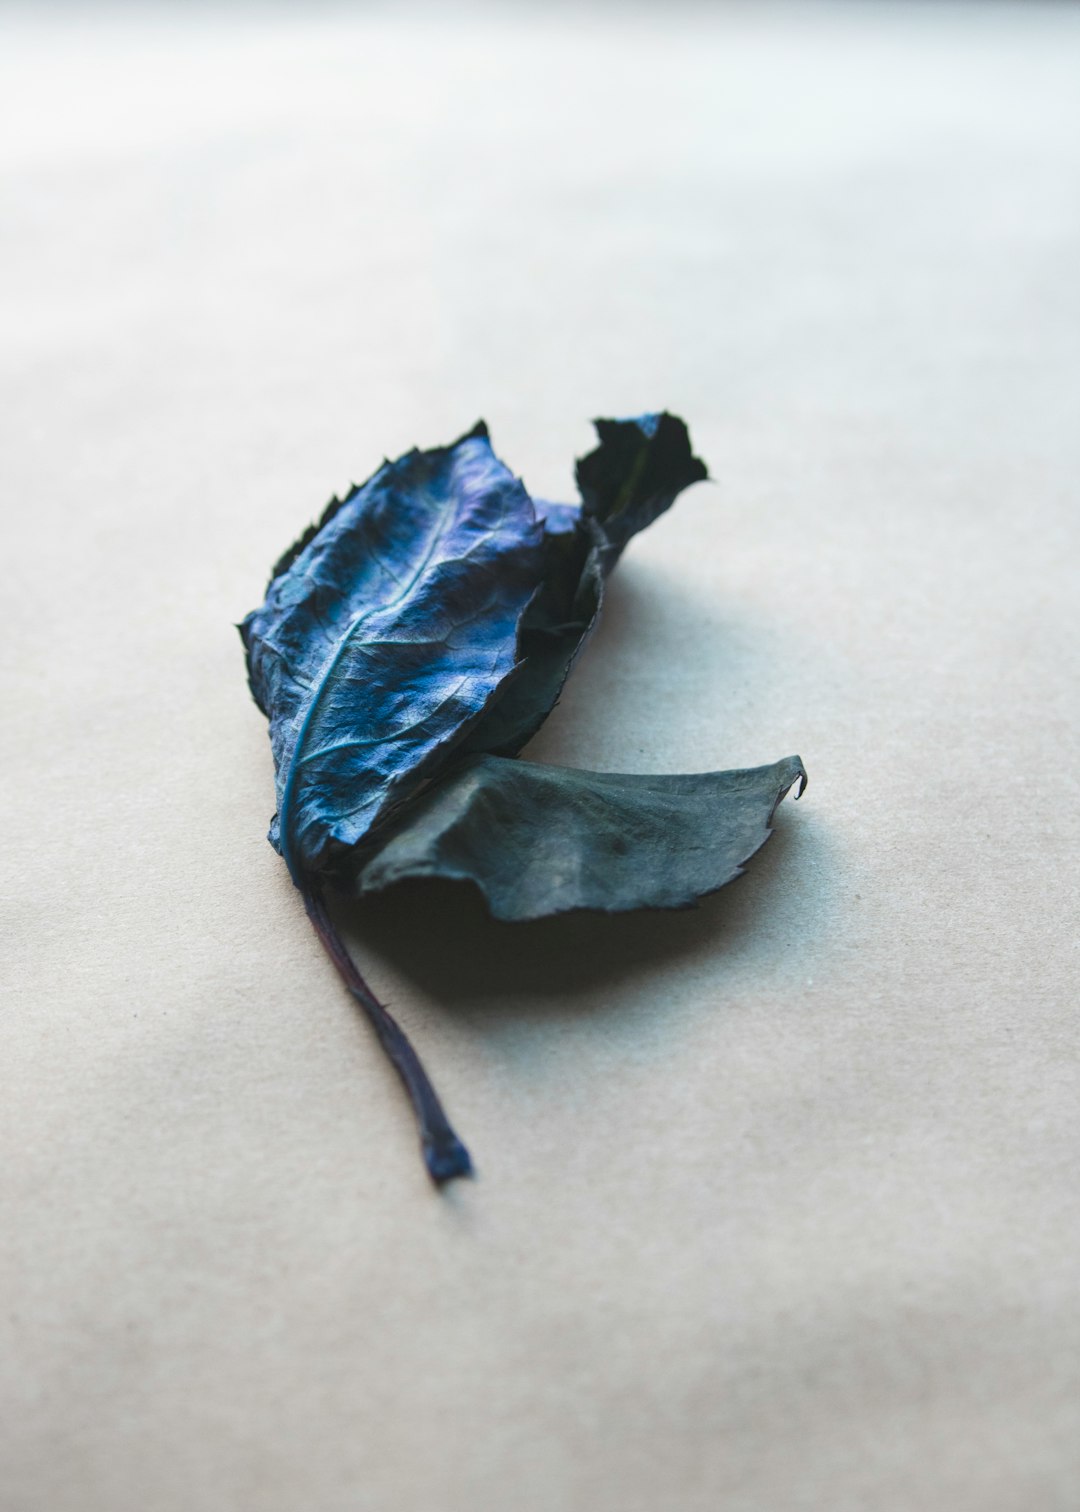 blue leaf on white surface